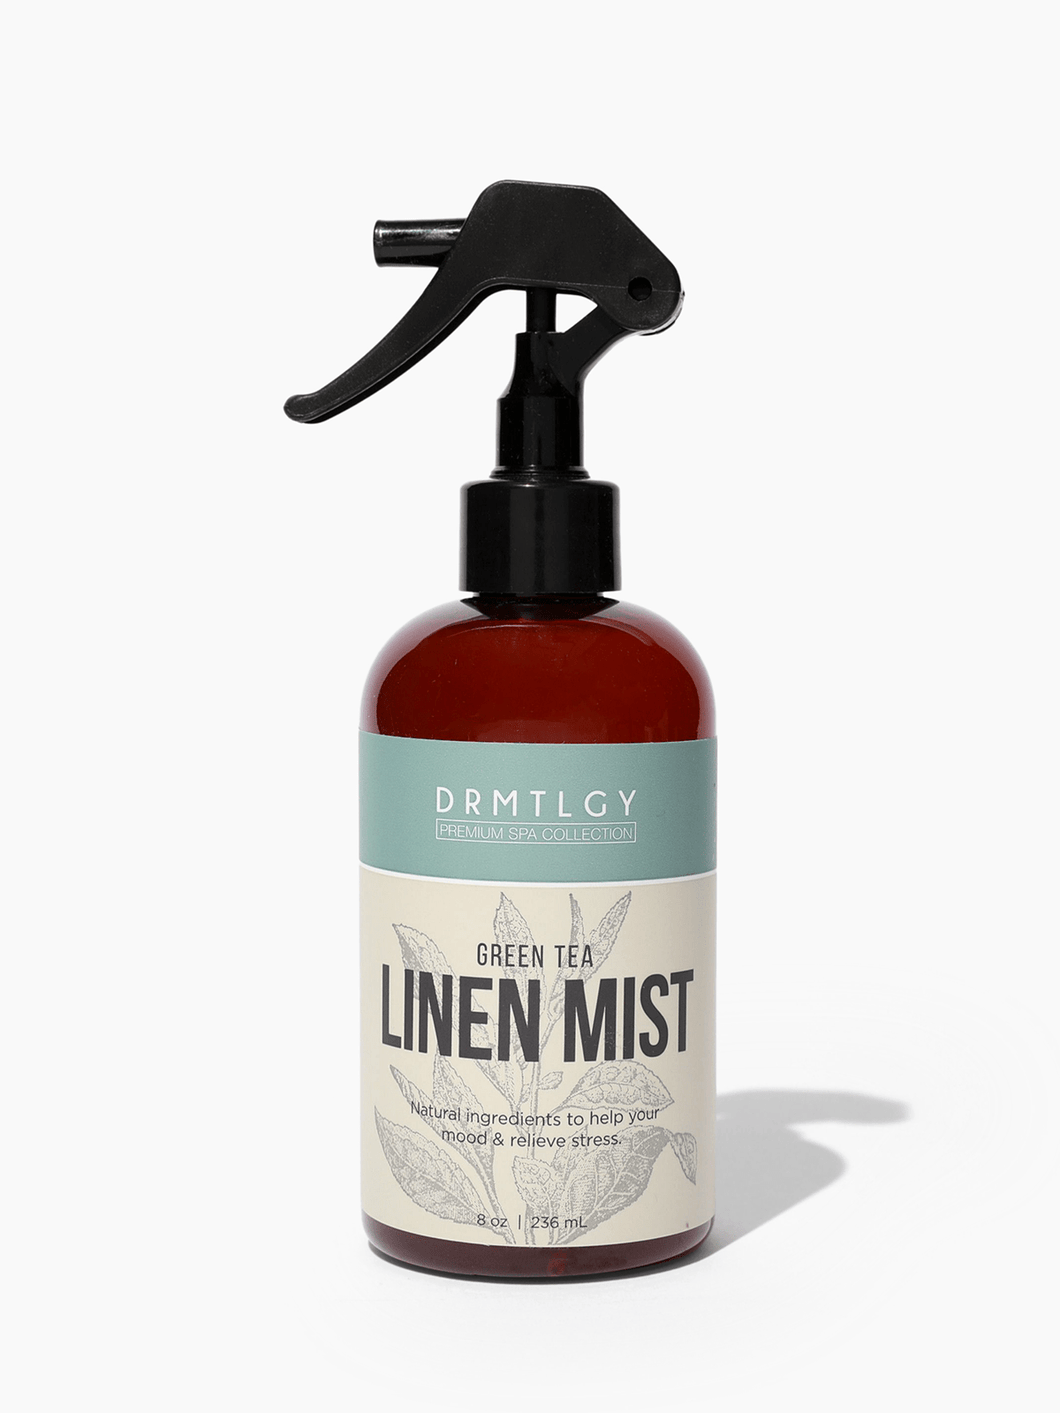 Linen Spray